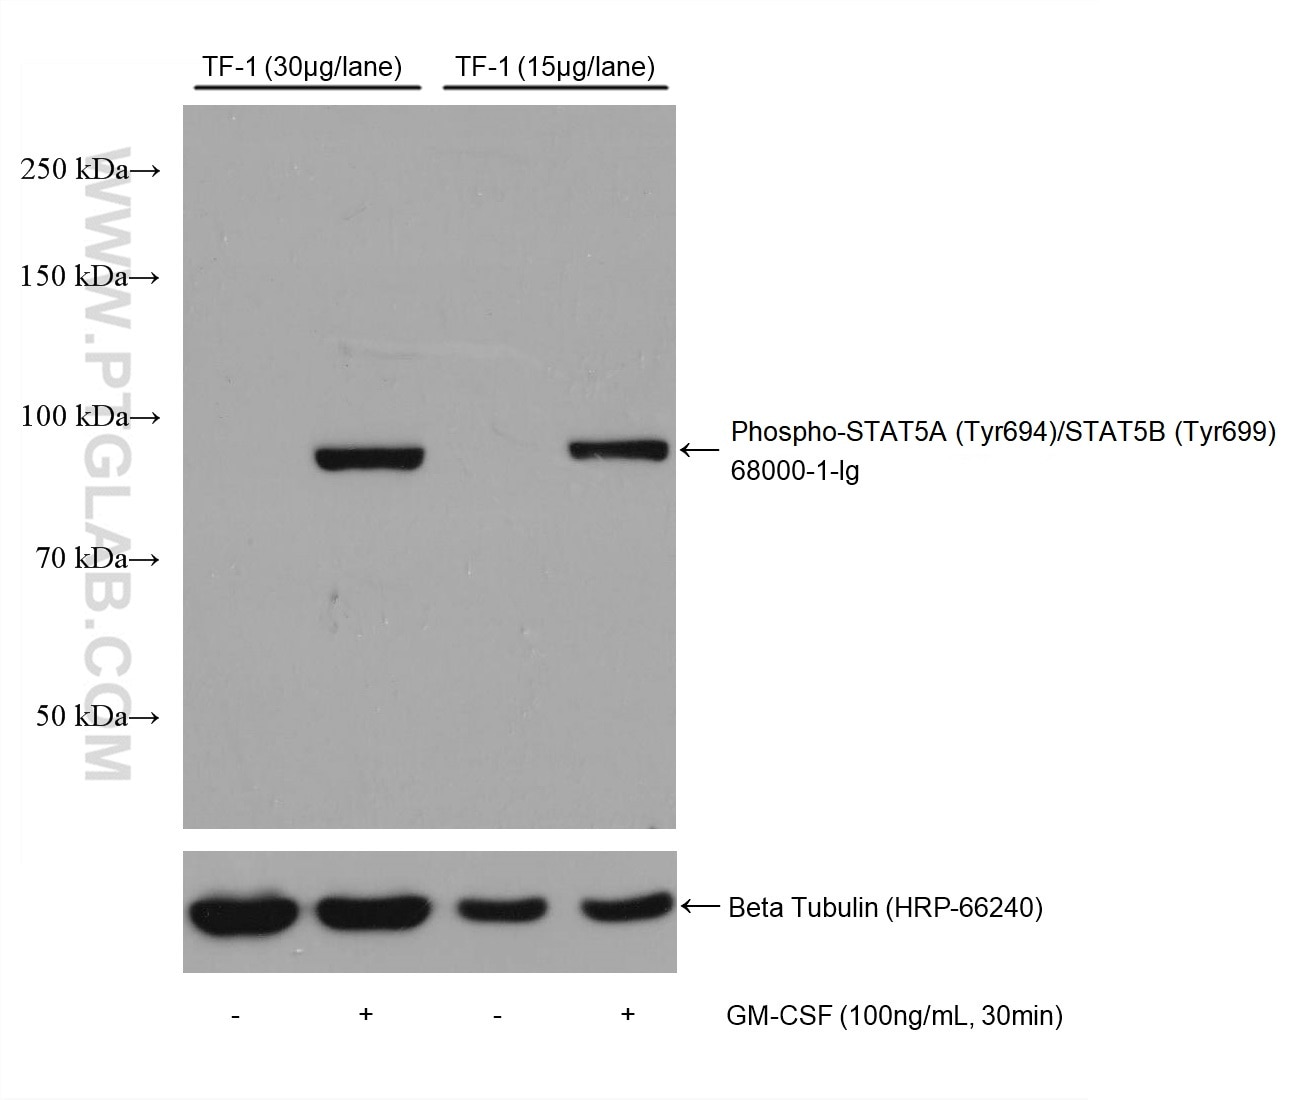 Phospho-STAT5A (Tyr694)/STAT5B (Tyr699)